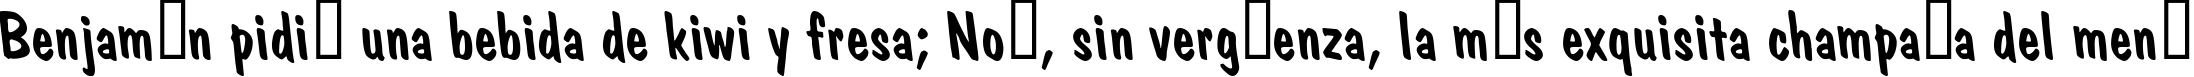 Пример написания шрифтом a_DomInoRevObl текста на испанском